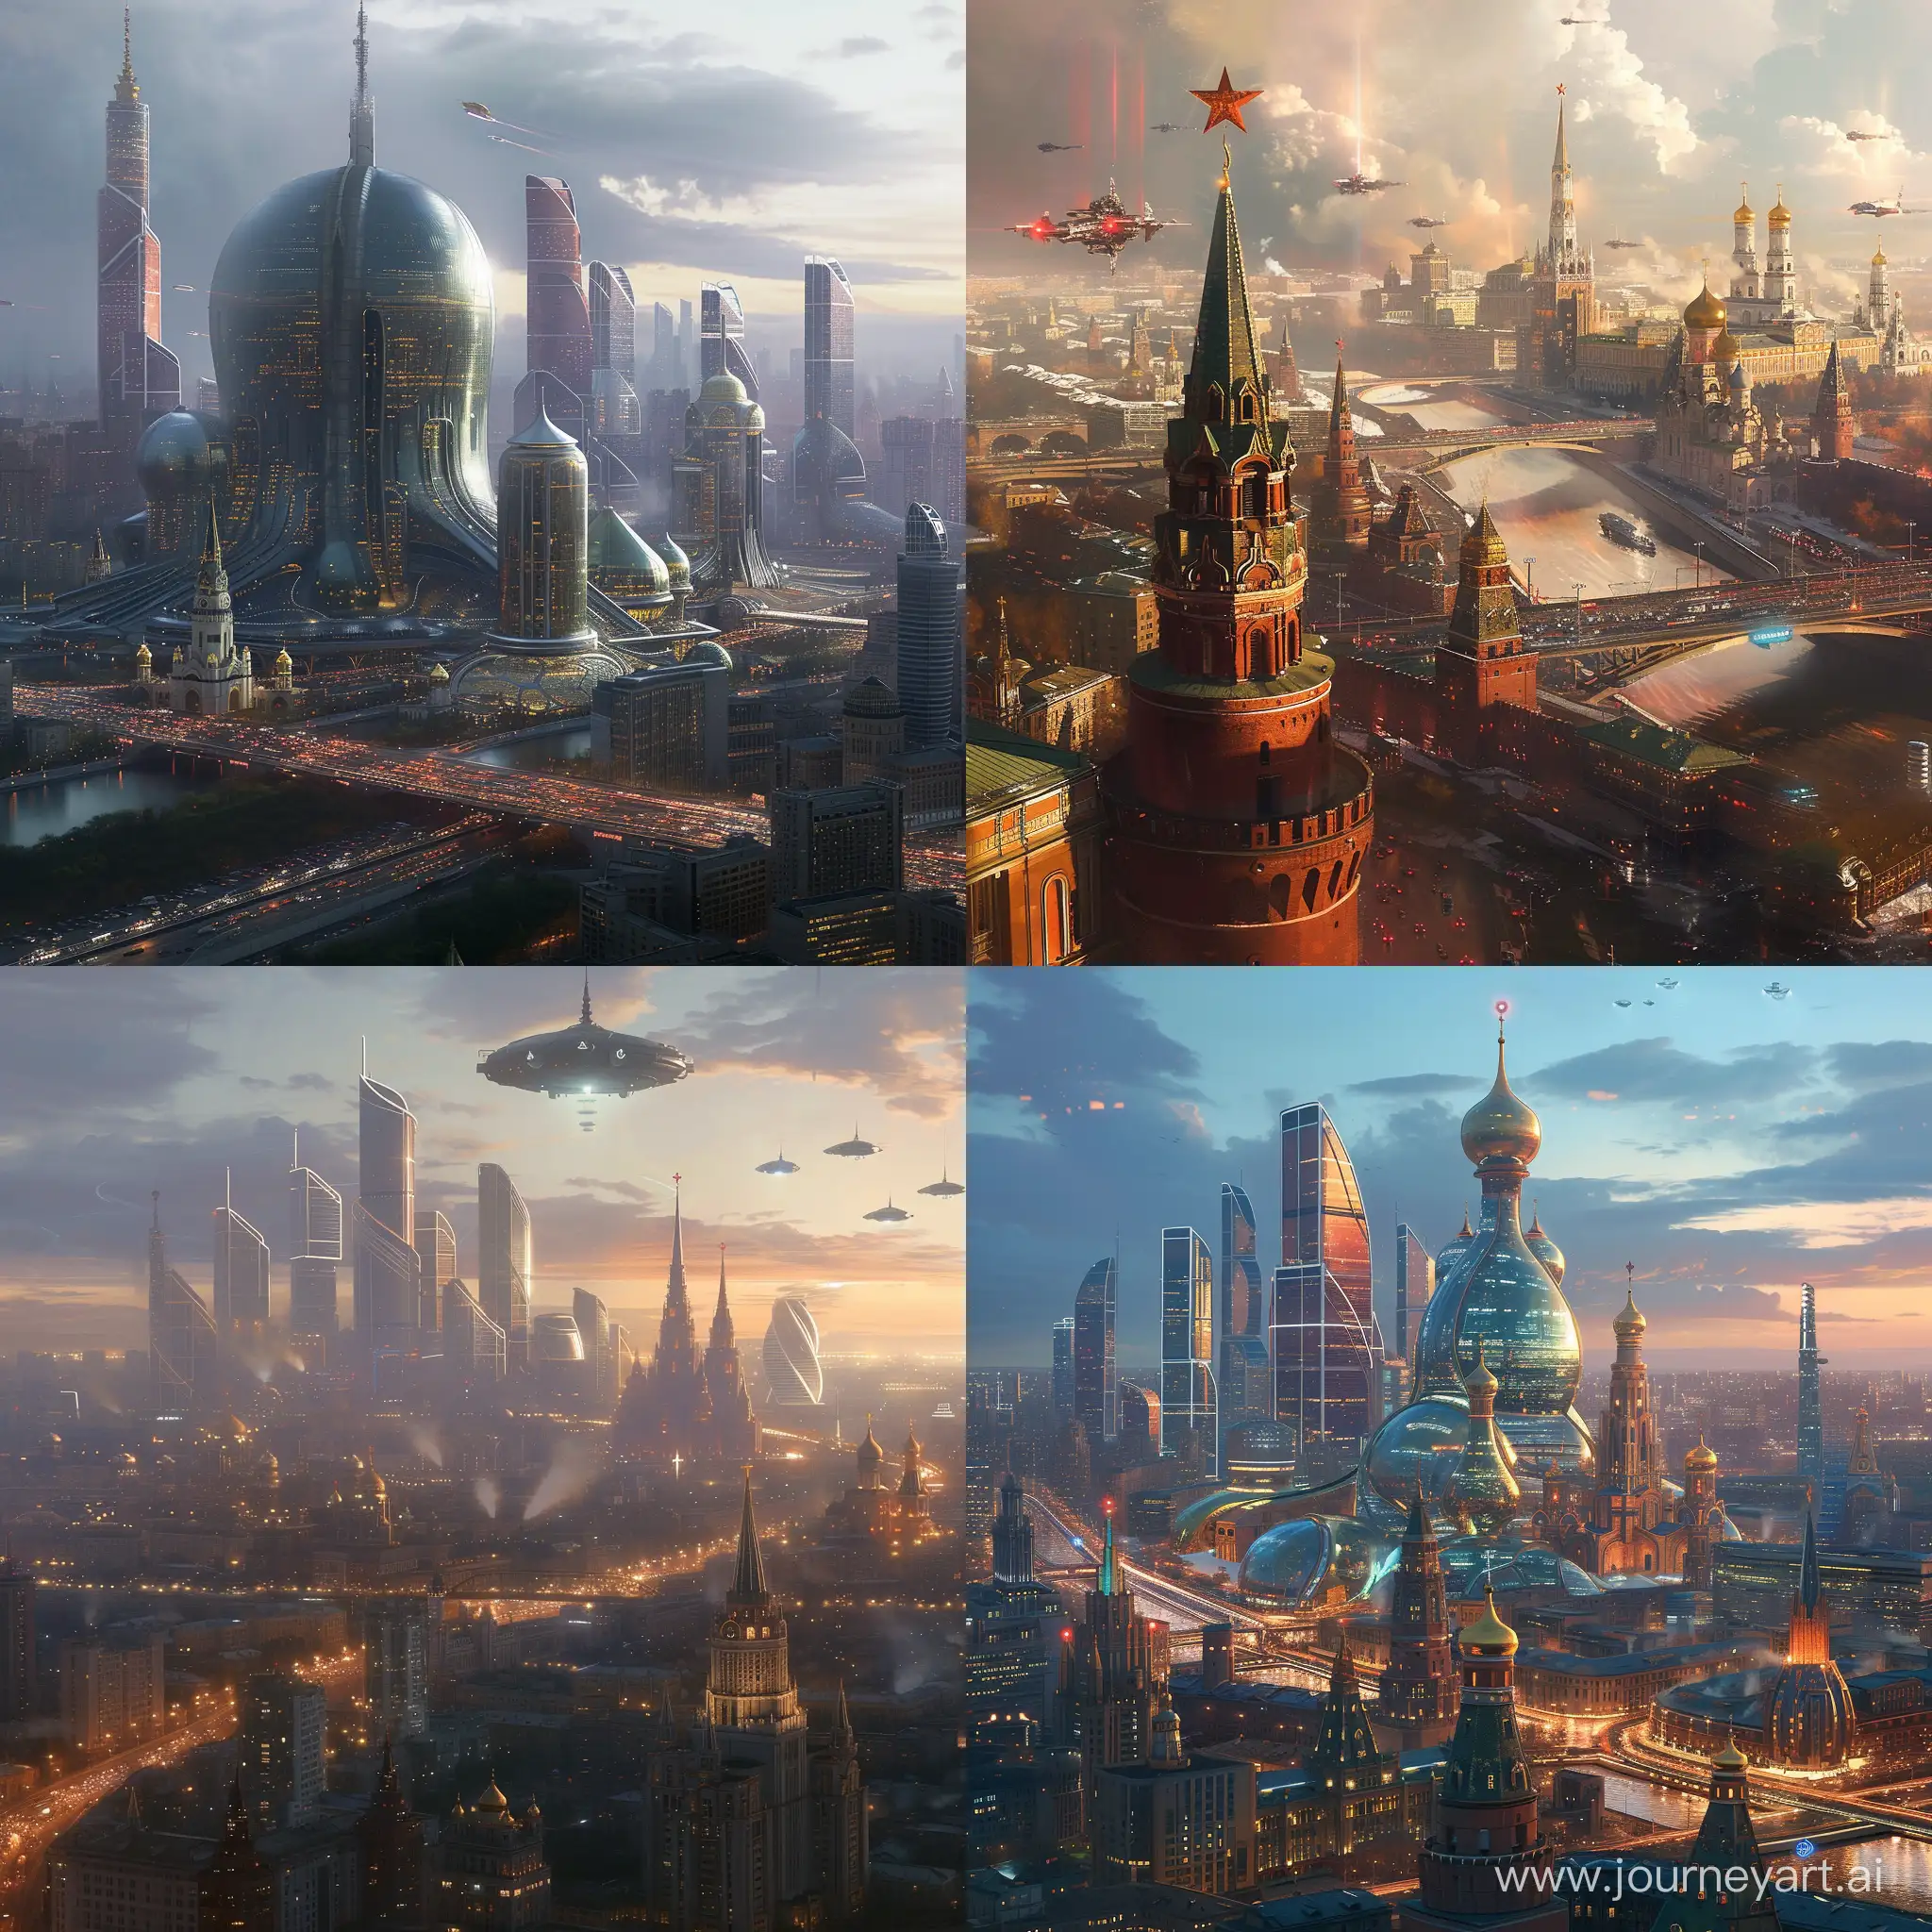 Futuristic Moscow by Greg Rutkowski and Craig Mullins